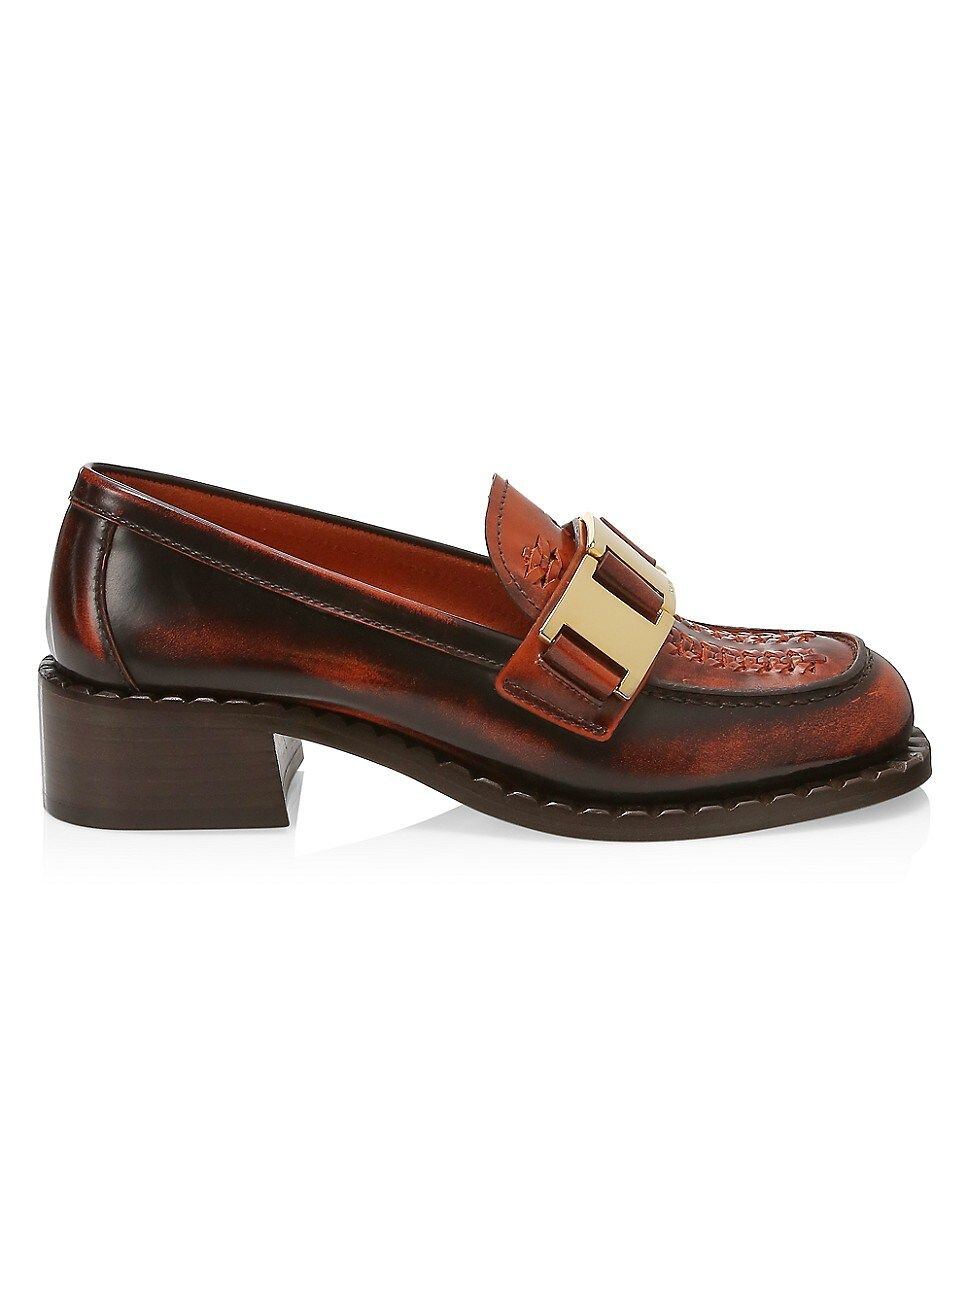 Prada Women's Block-Heel Leather Loafers - Arancio - Size 35 (5) | Saks Fifth Avenue